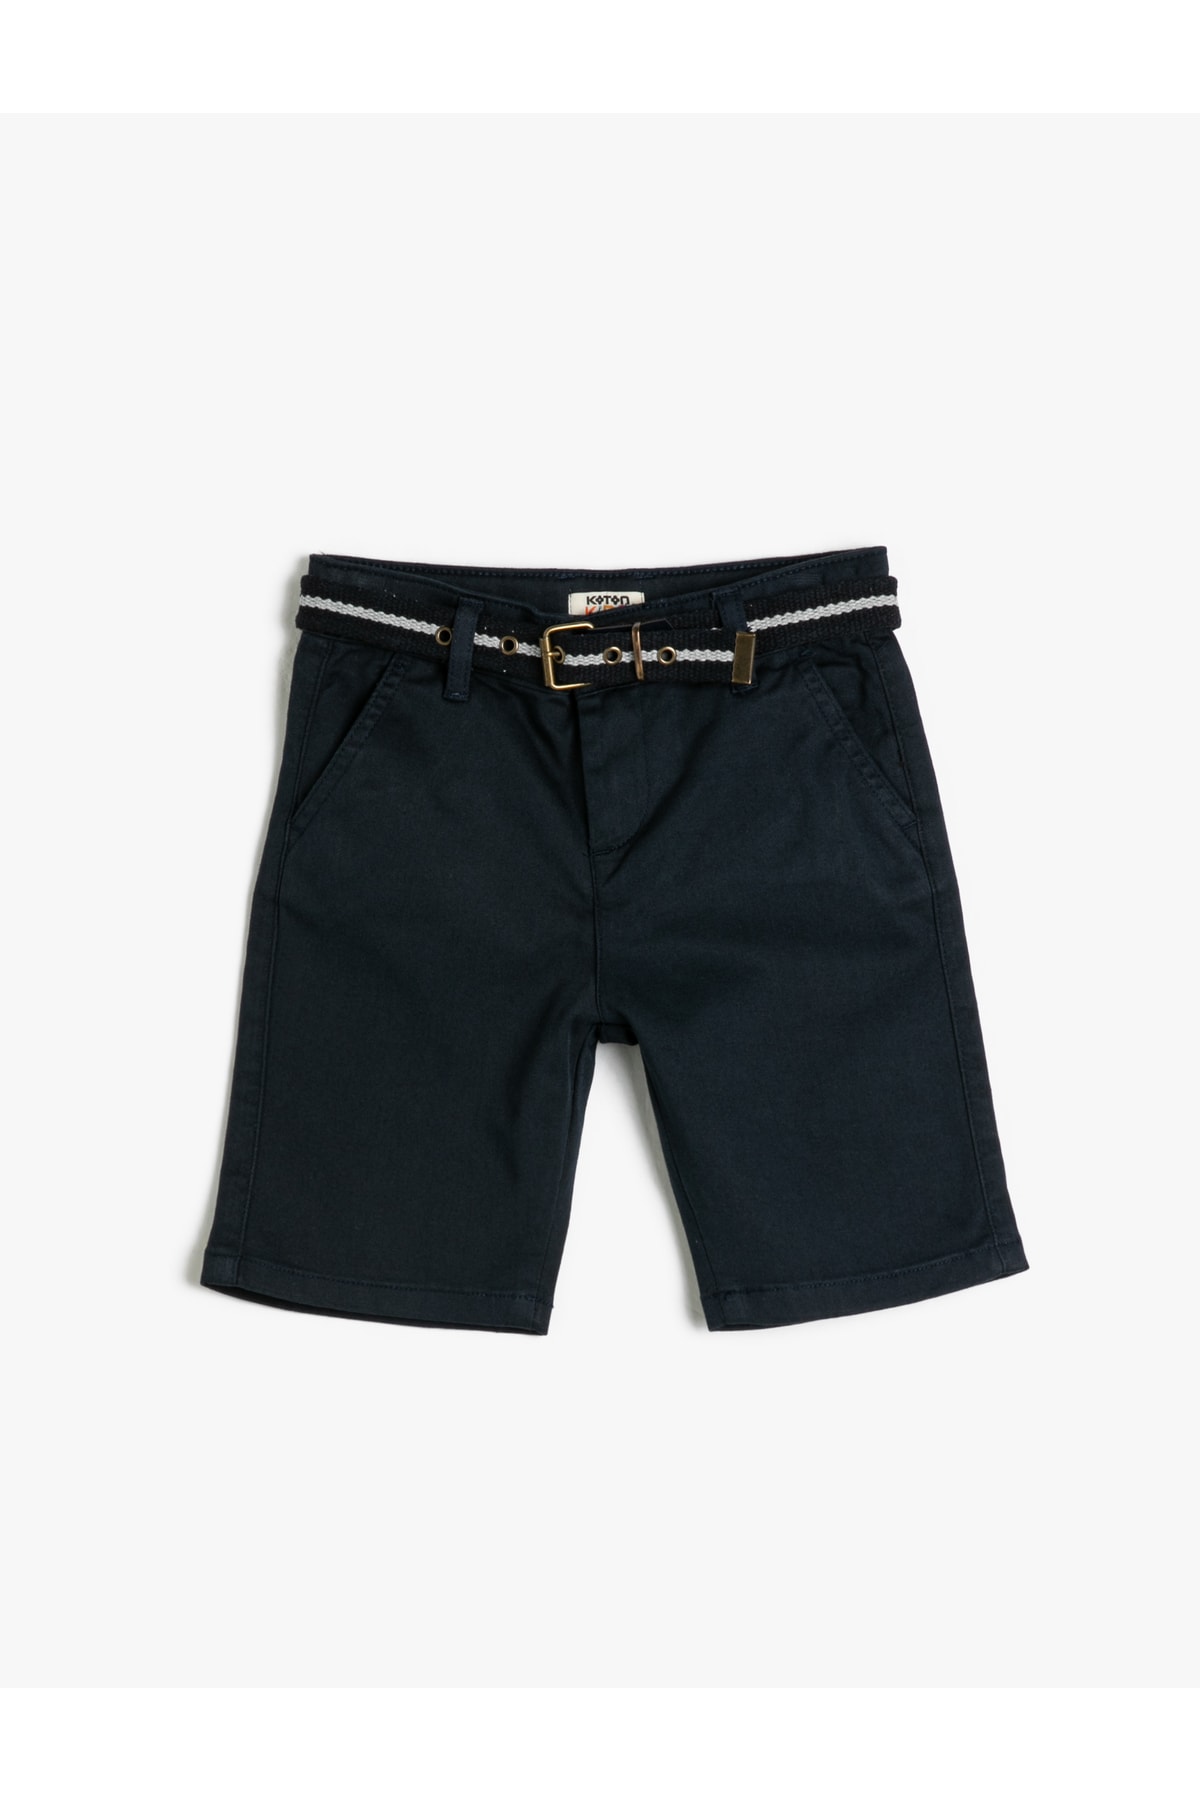 Levně Koton Basic Bermuda Shorts With Belt Detail Pockets Cotton Cotton with Adjustable Elastic Waist.